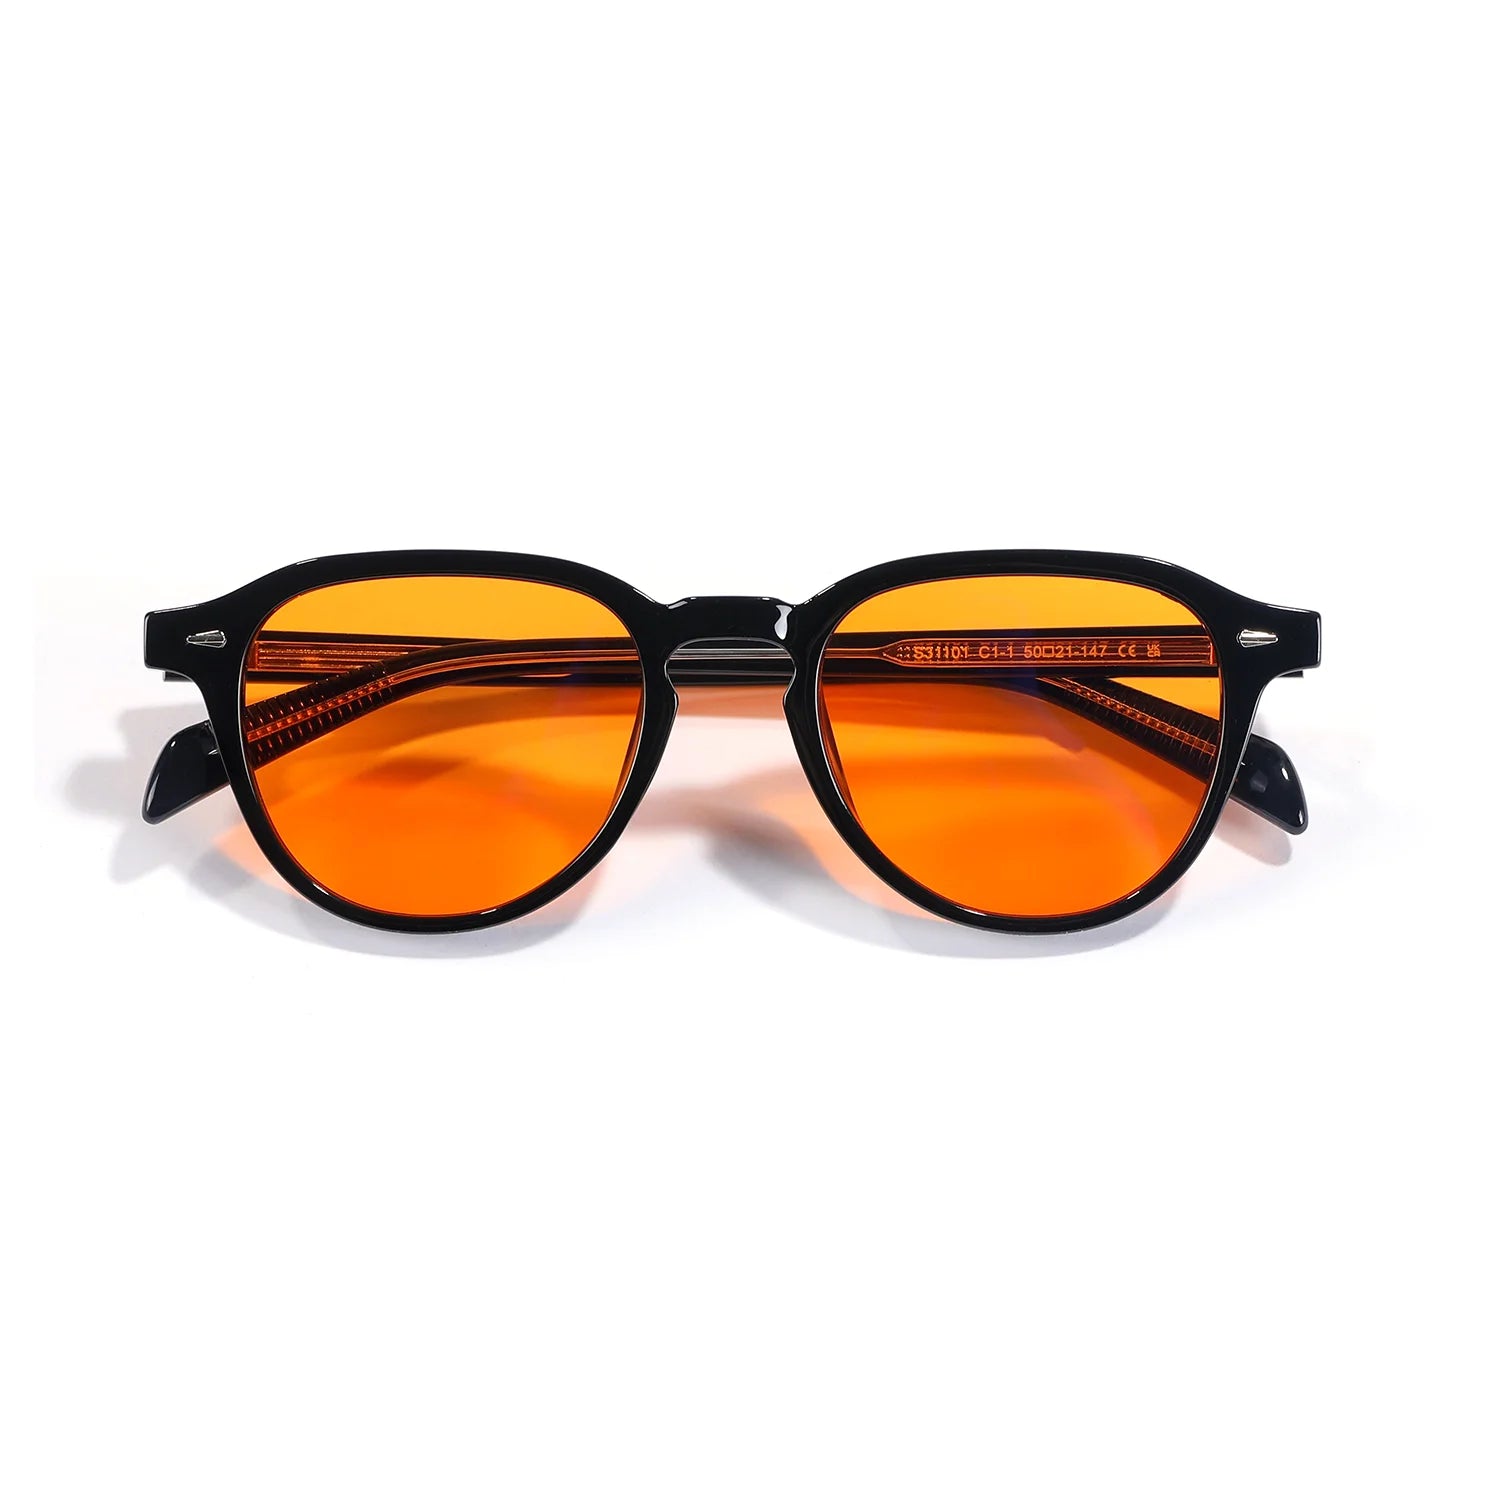 Black-framed sunglasses with orange-tinted lenses on a white background.